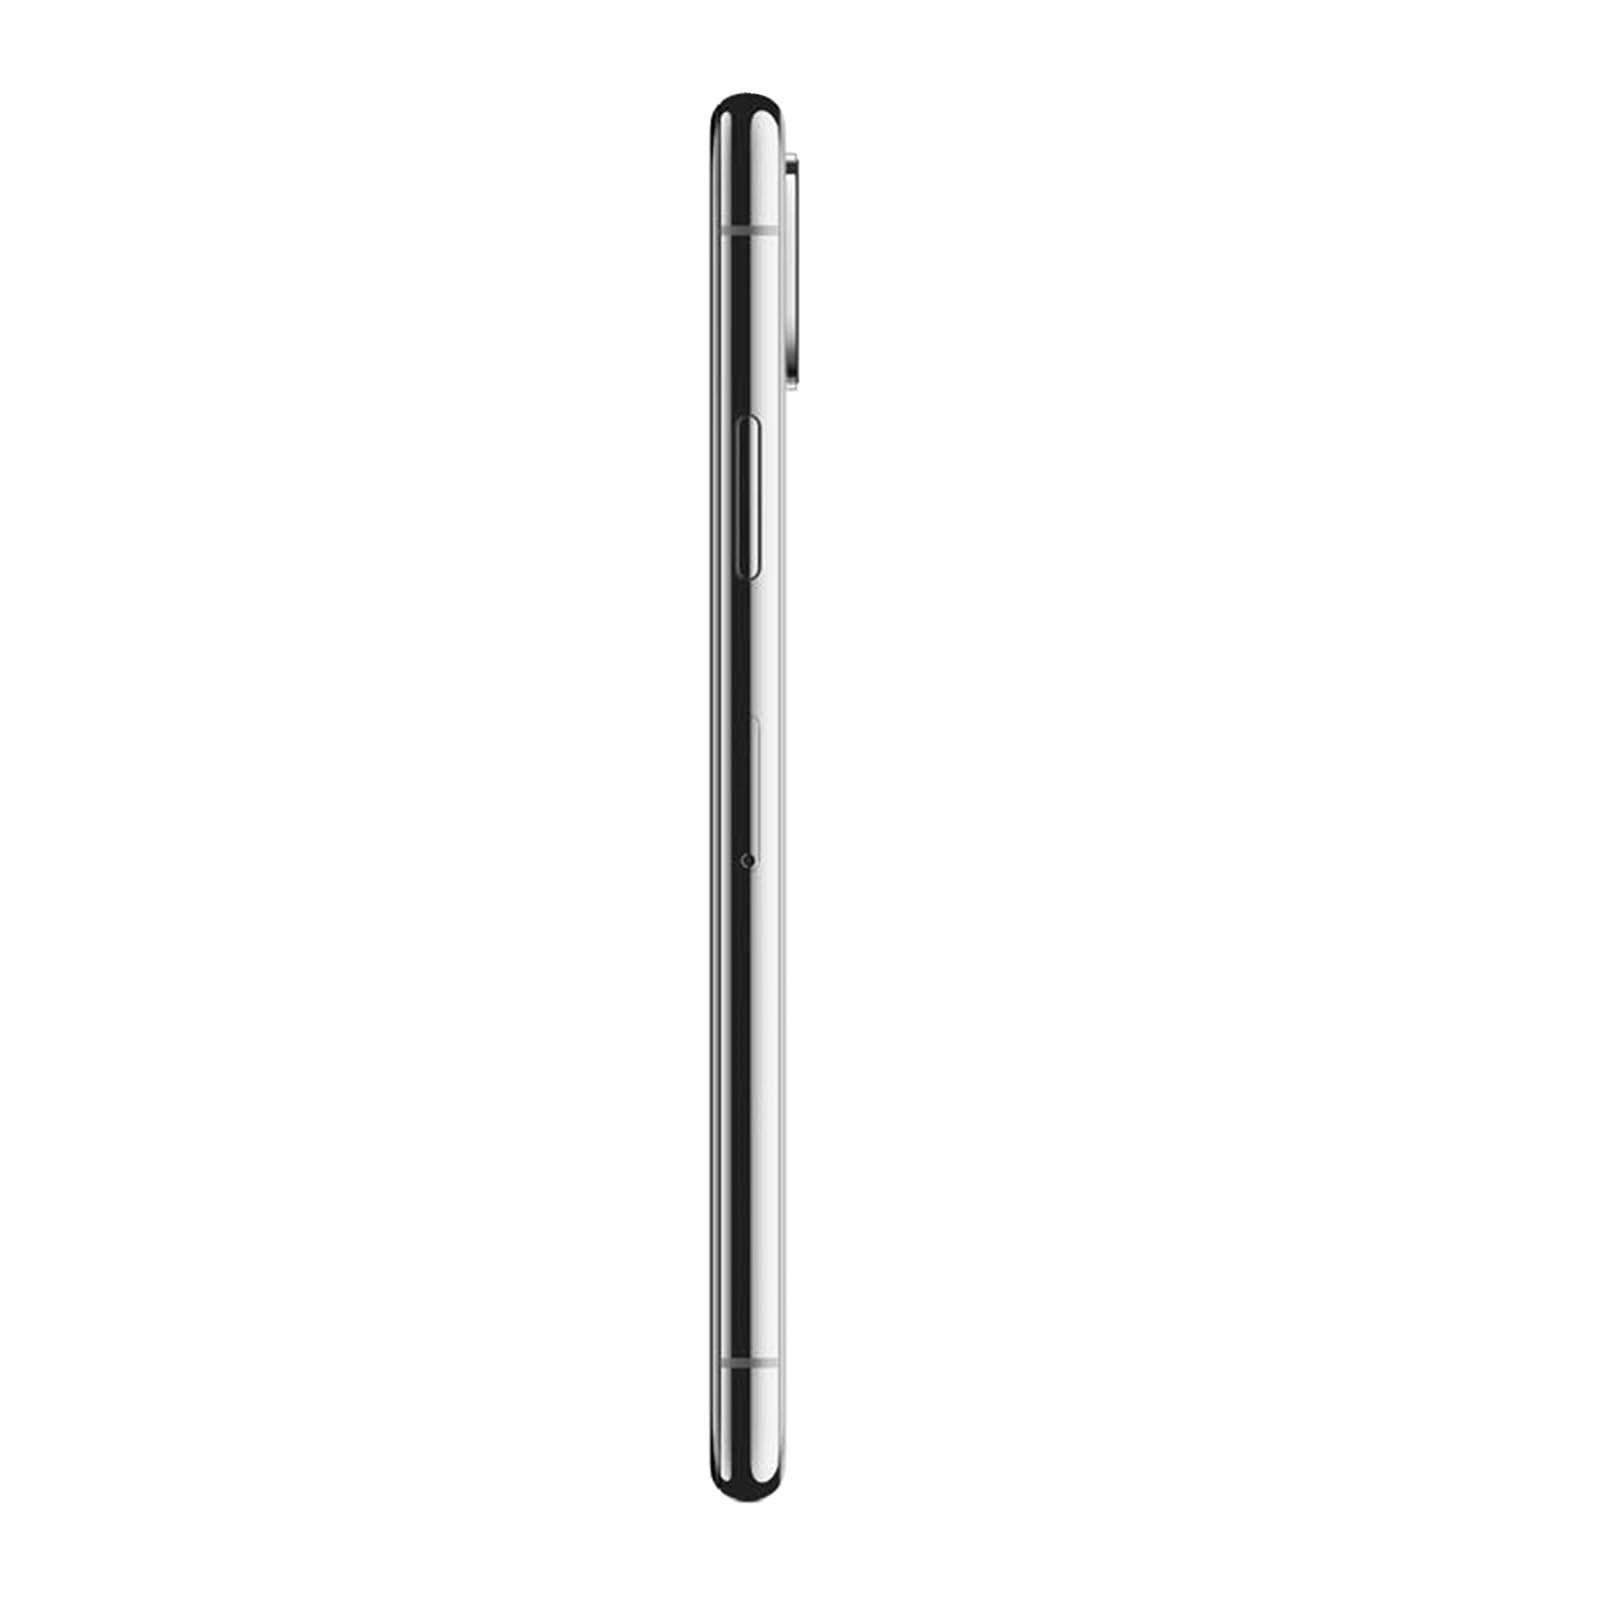 Apple iPhone XS 64GB Space Grey Good - Unlocked